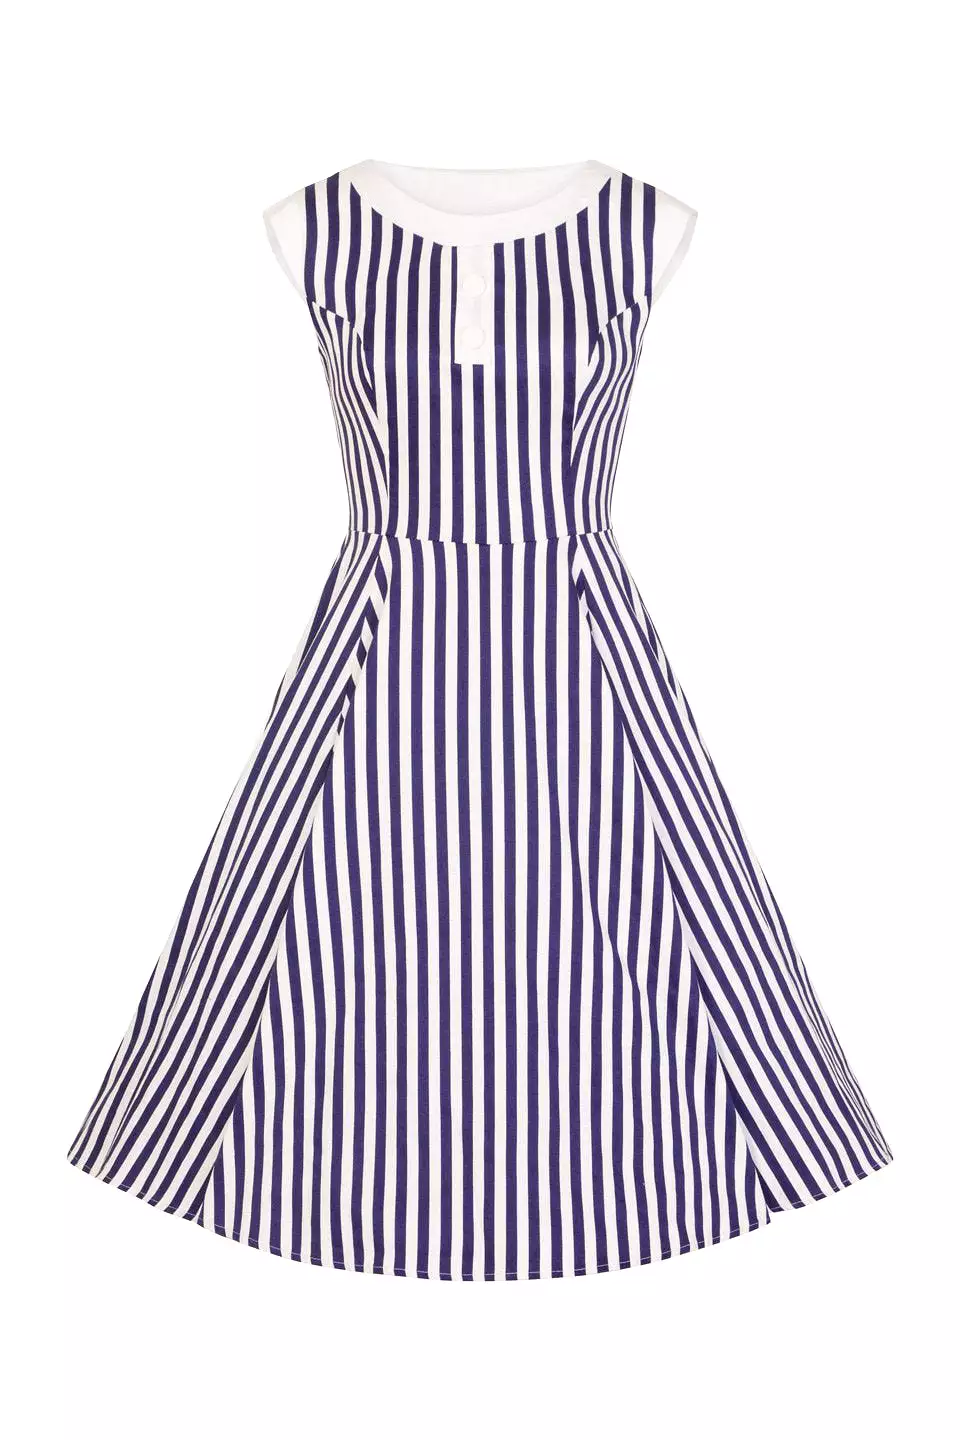 Navy Blue and White Striped Sleeveless Rockabilly 50s Swing Dress